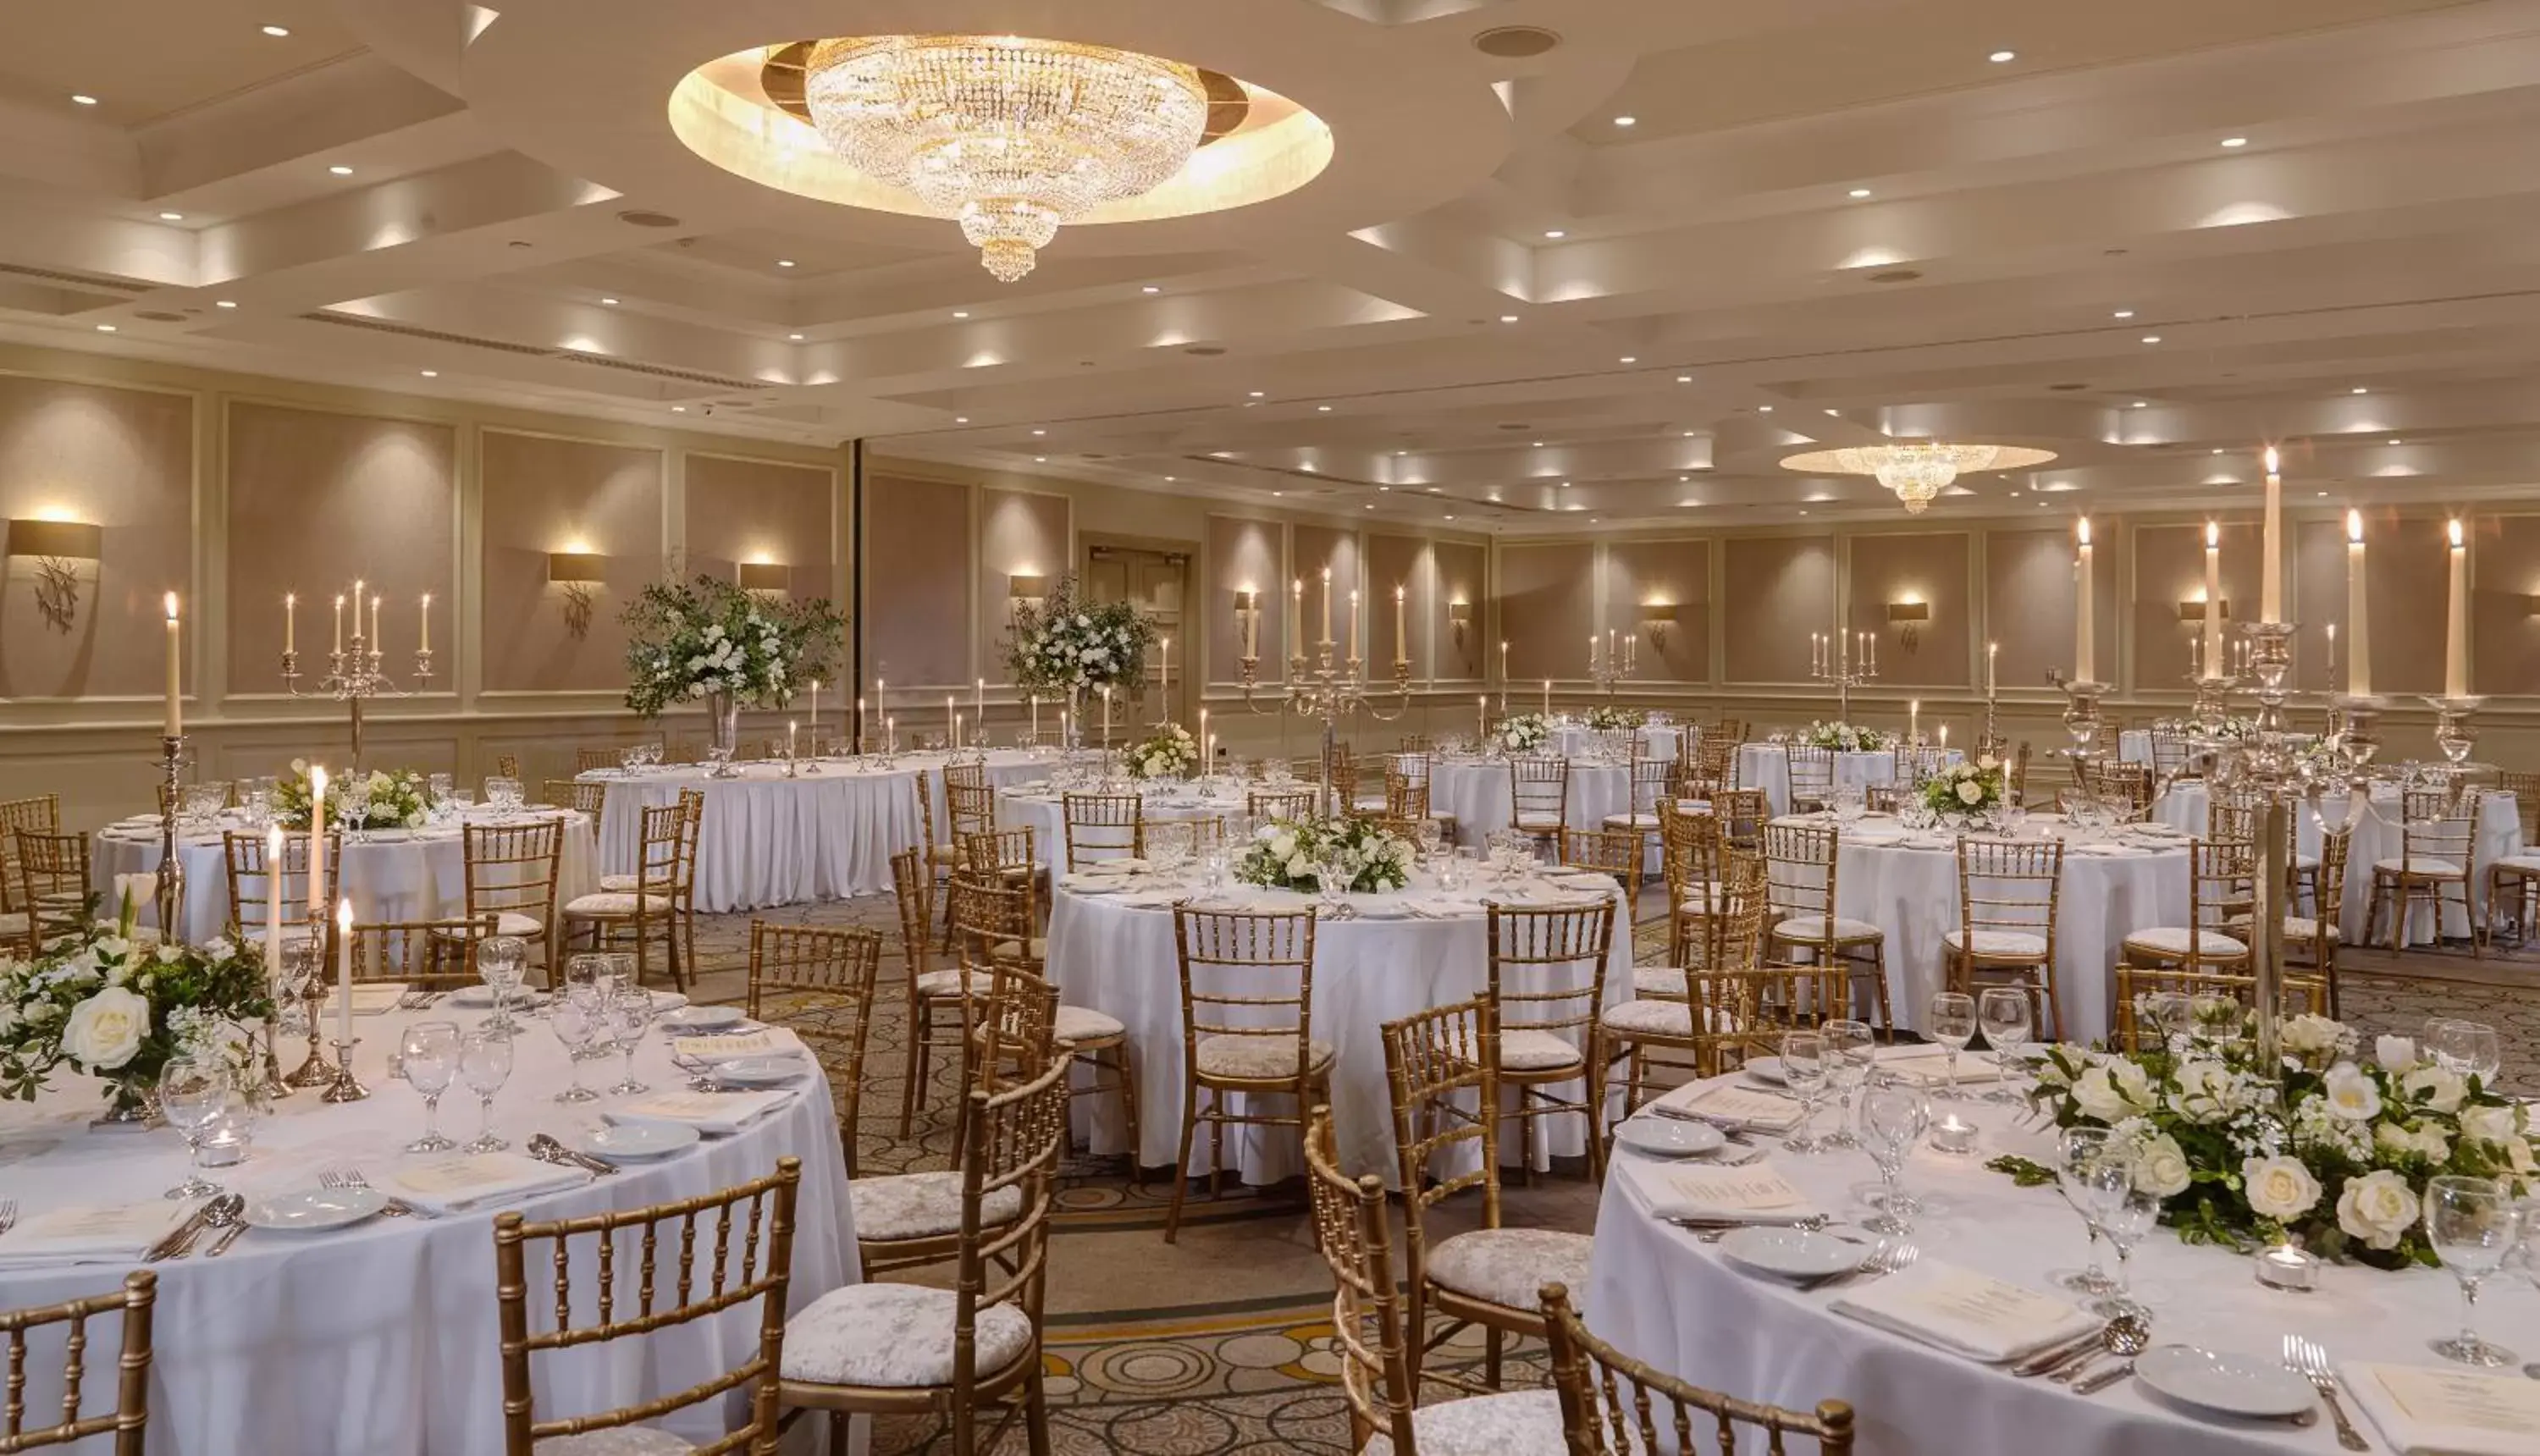 Banquet/Function facilities, Banquet Facilities in Druids Glen Resort